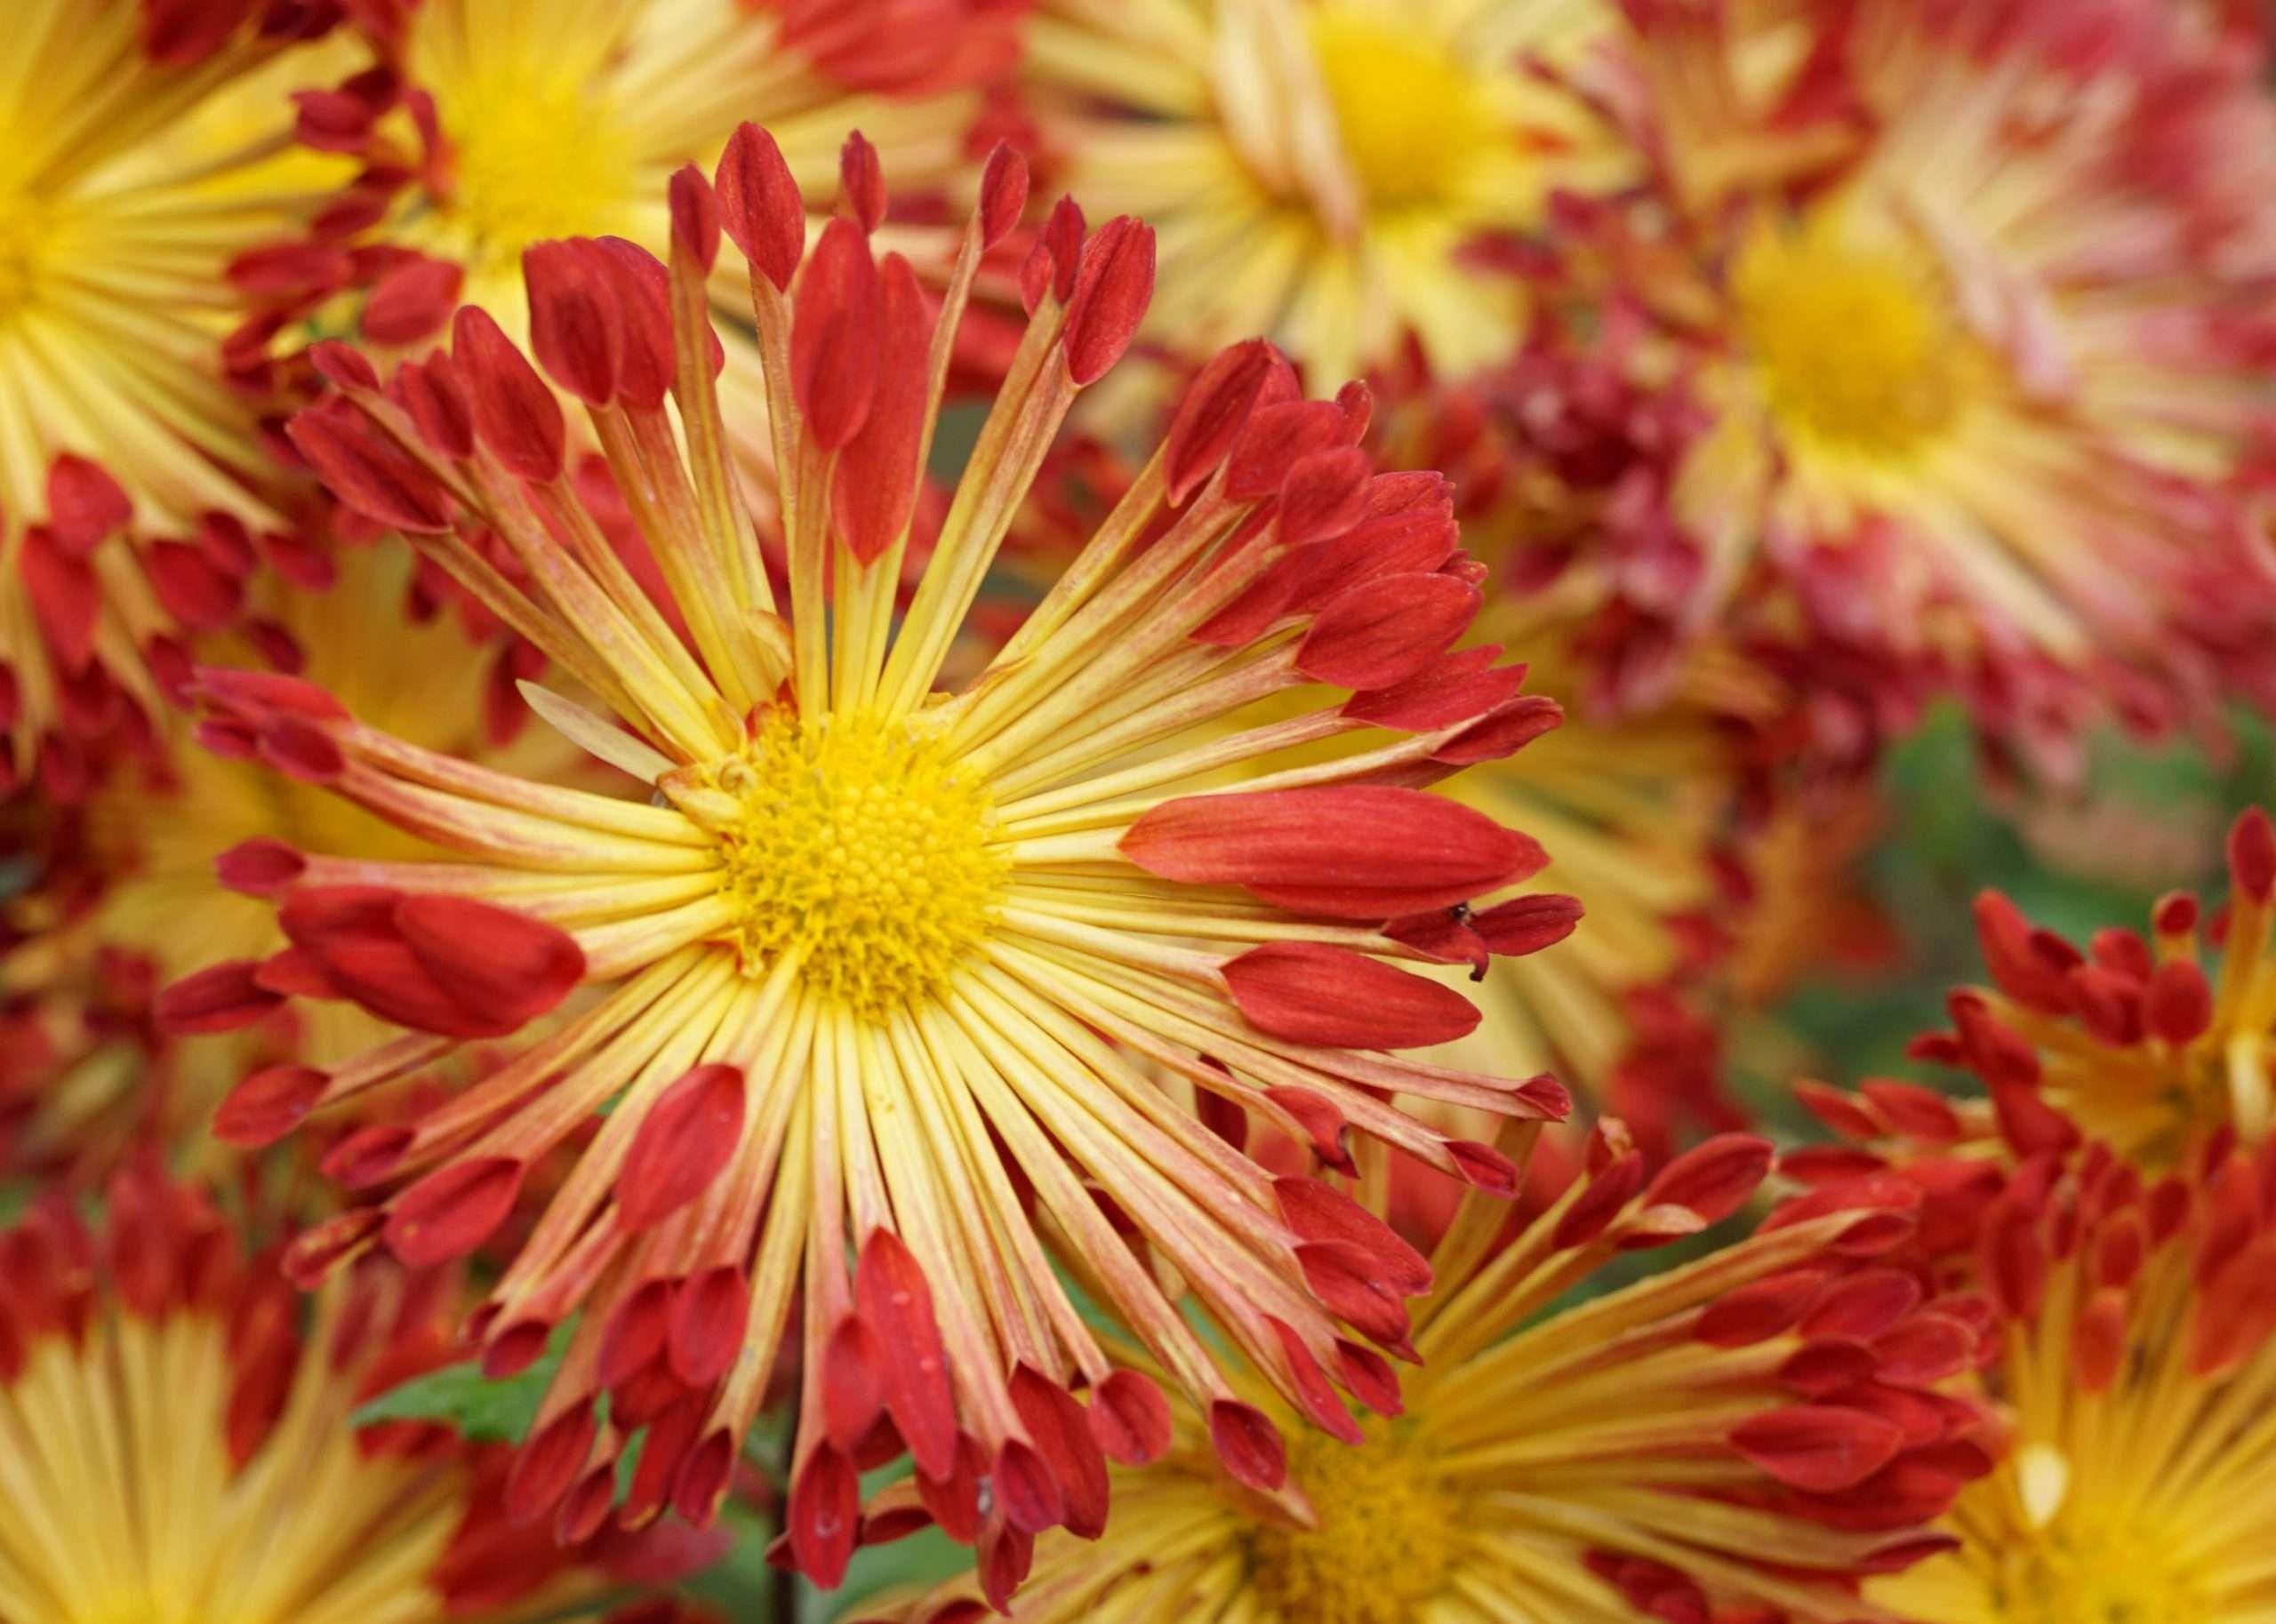 Photo of Mum (Chrysanthemum 'Matchsticks') uploaded by Joy